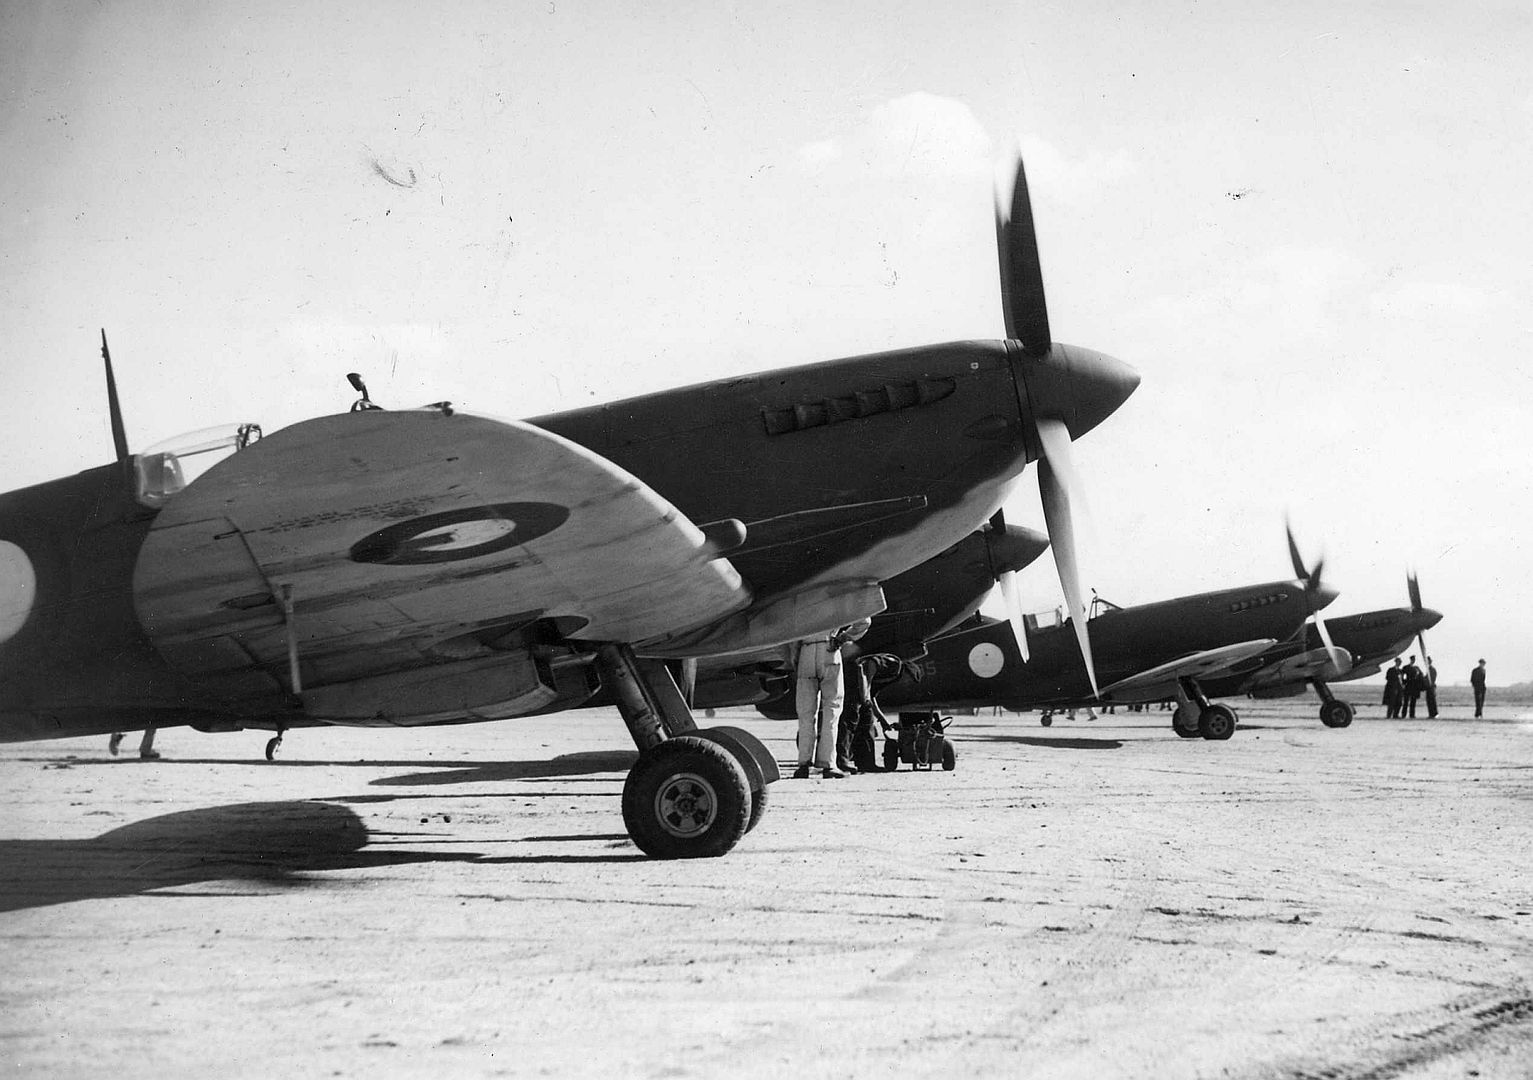 Spitfire Squadron Preparing For A Demonstration Flight